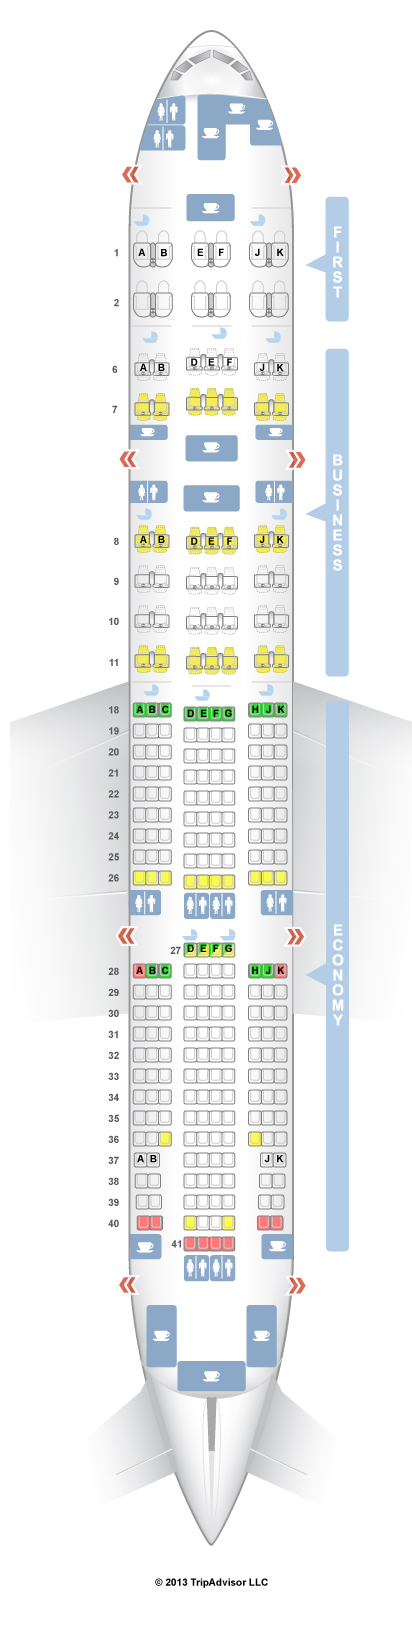 Emirates 777 Seating Chart